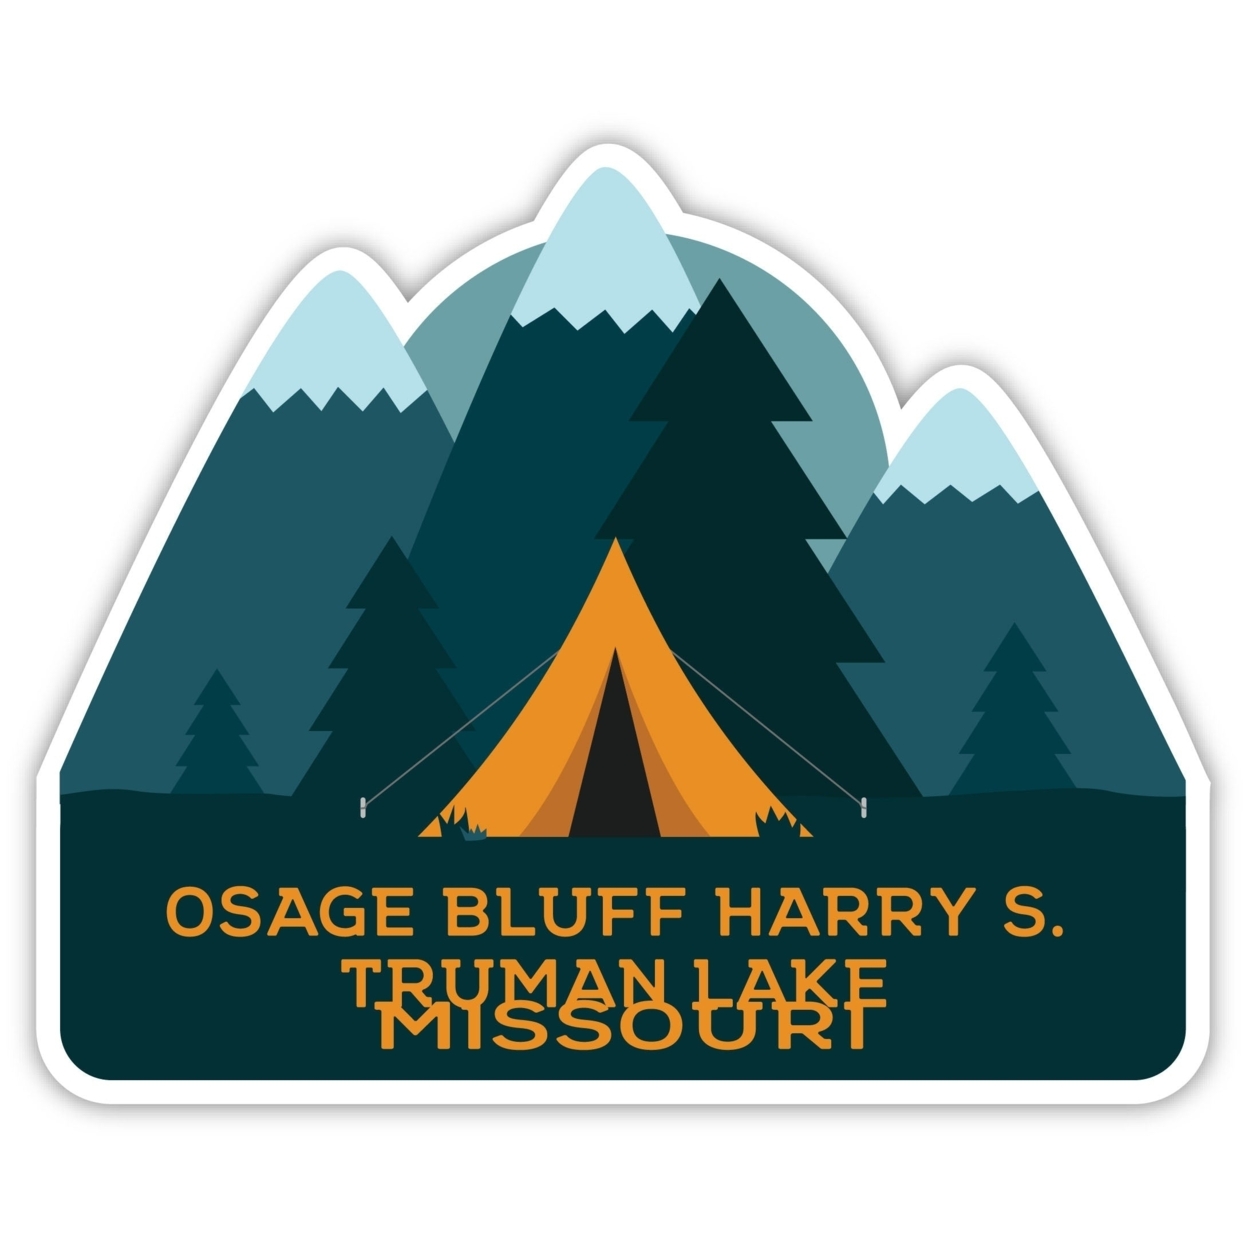 Osage Bluff Harry S. Truman Lake Missouri Souvenir Decorative Stickers (Choose Theme And Size) - Single Unit, 2-Inch, Tent